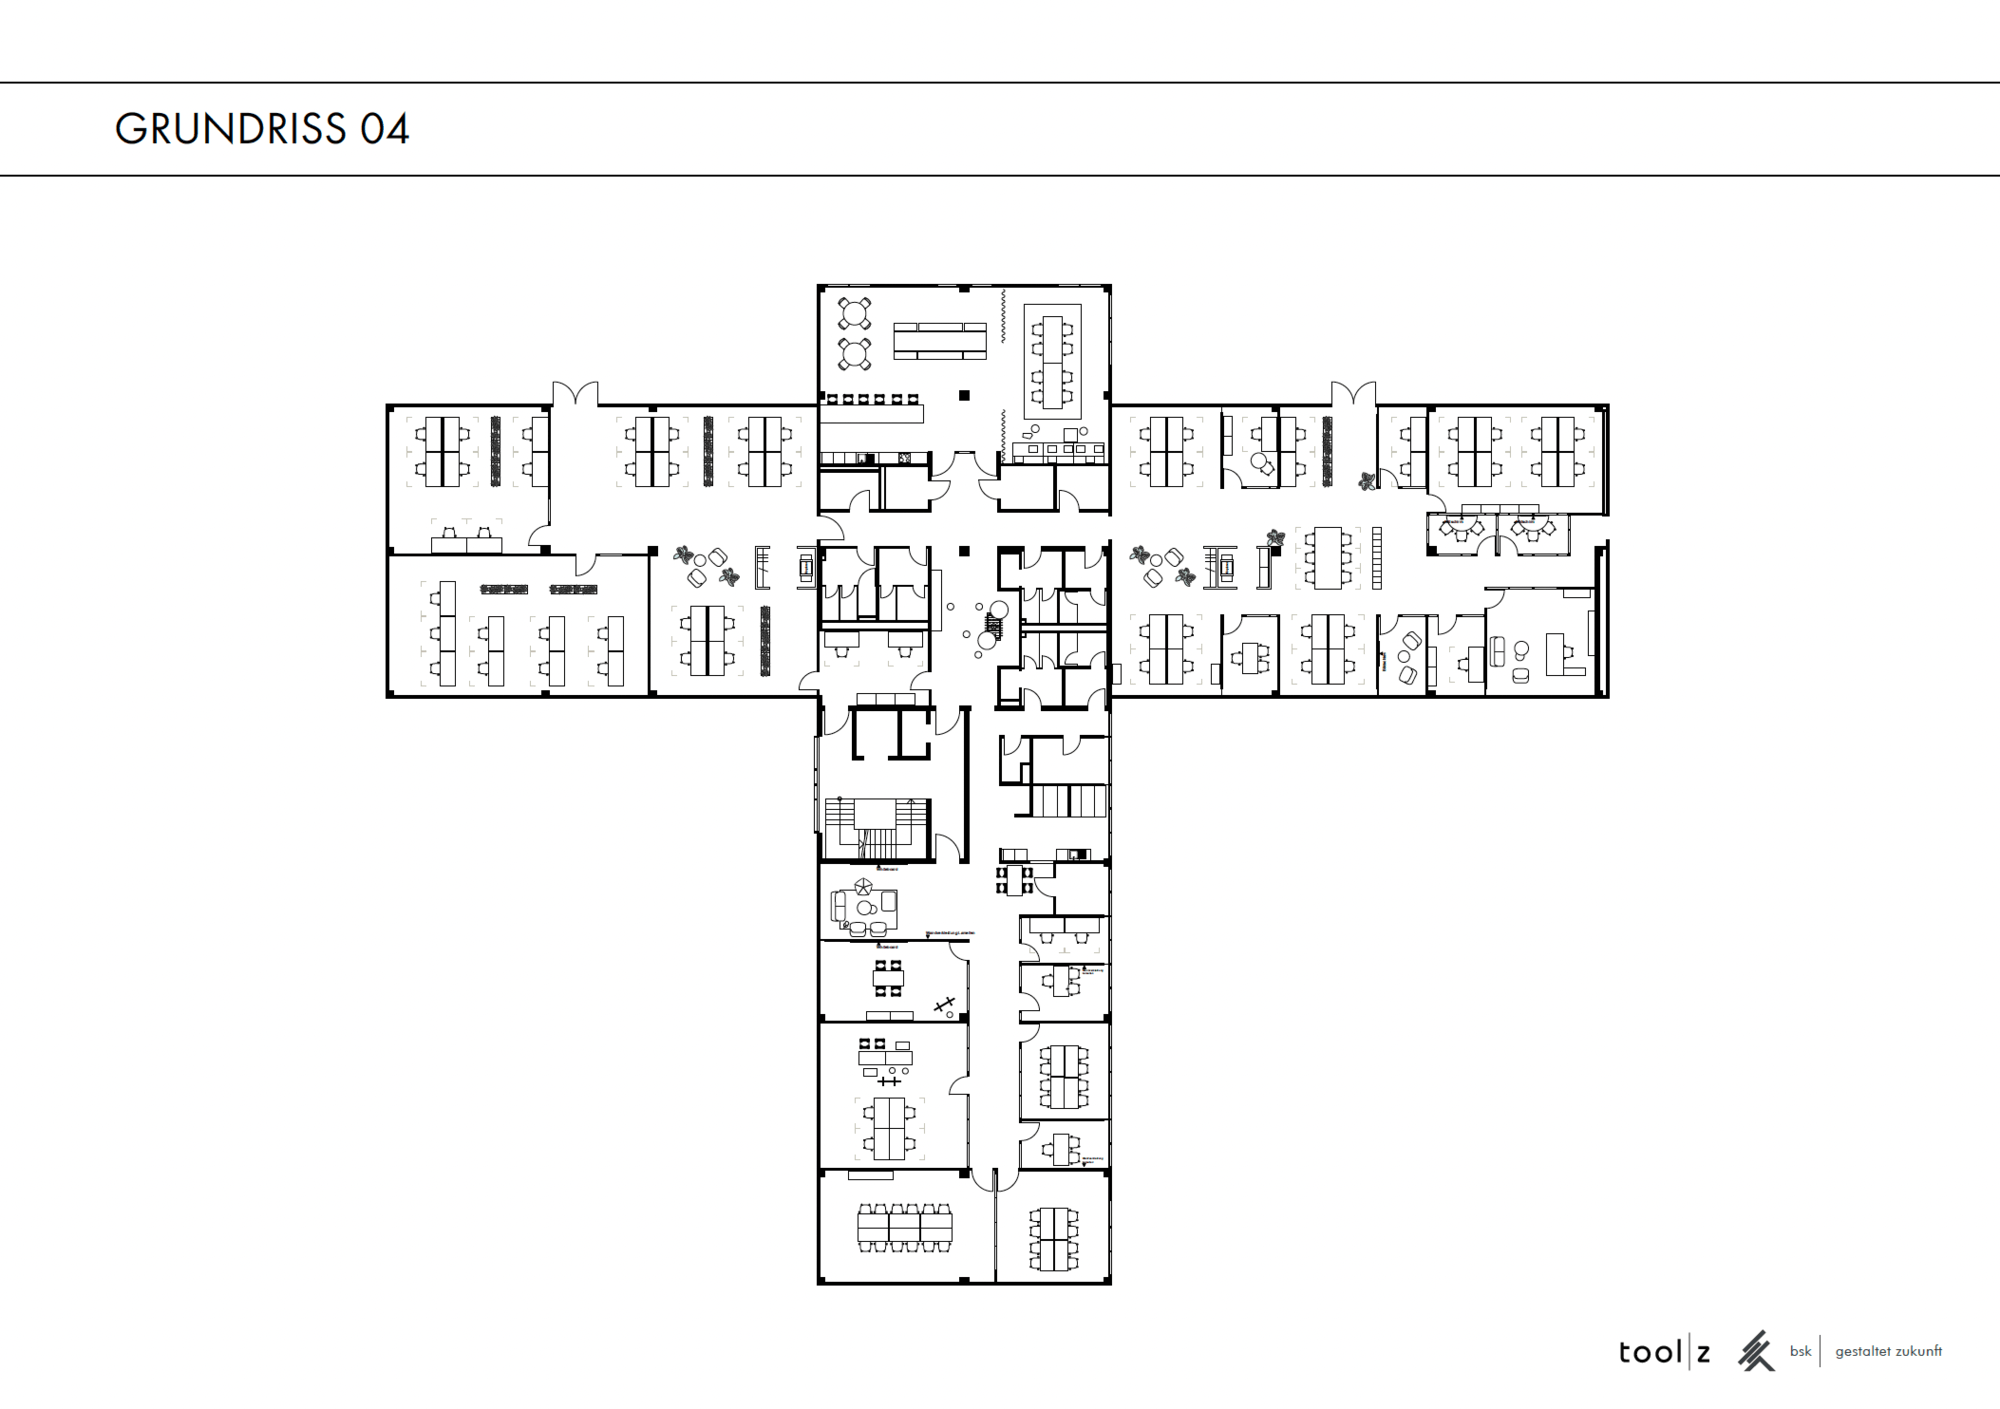 bsk-rendering-workshop-map-grundriss-04